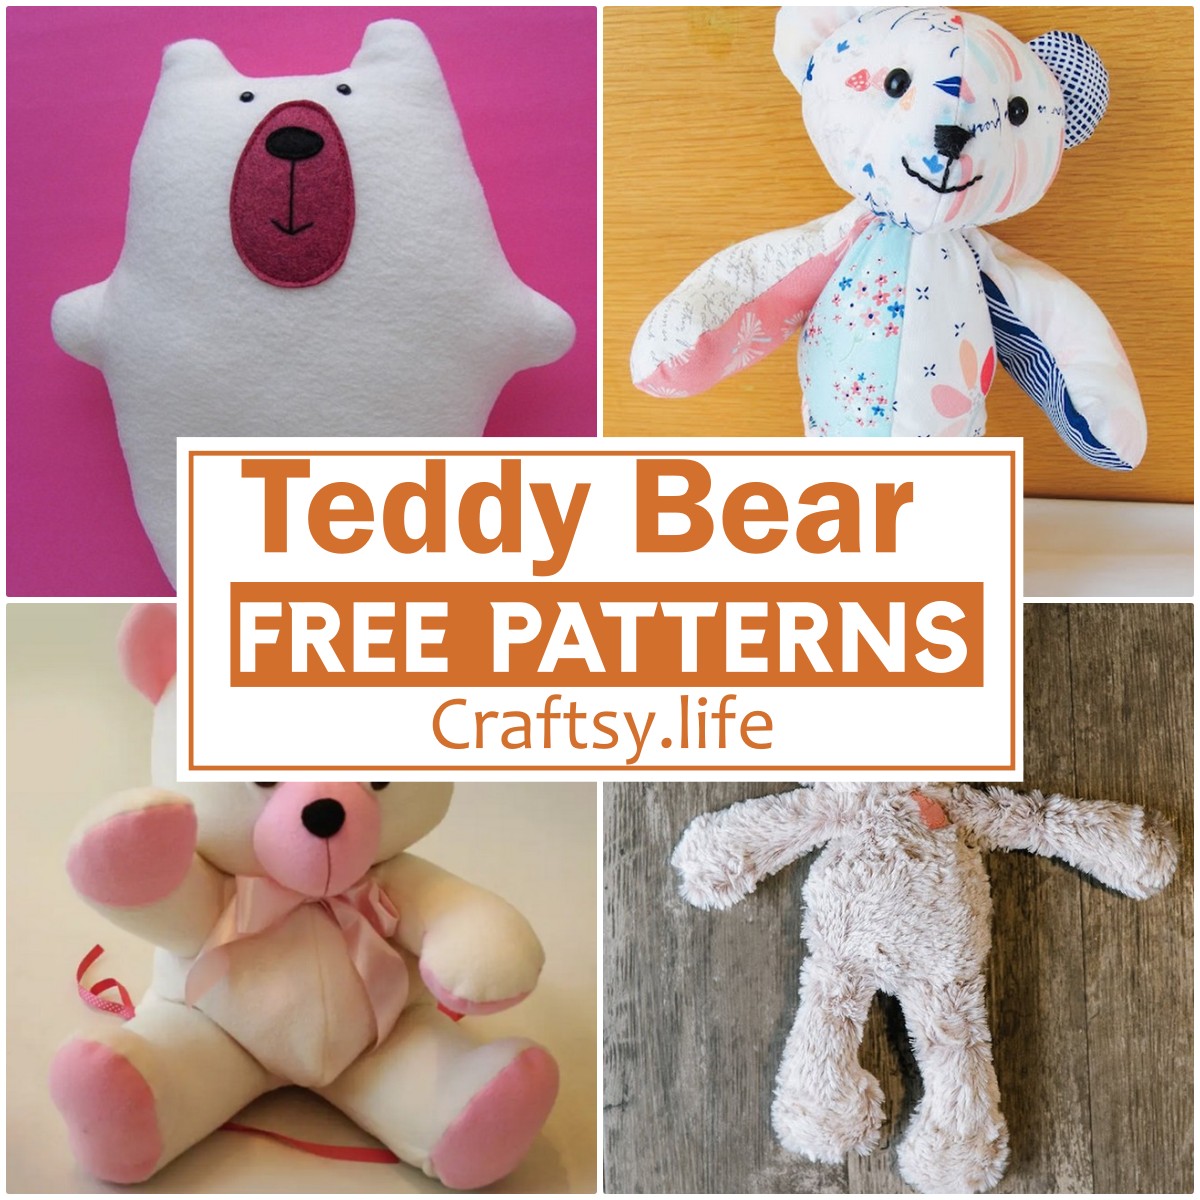 Free Teddy Bear Patterns